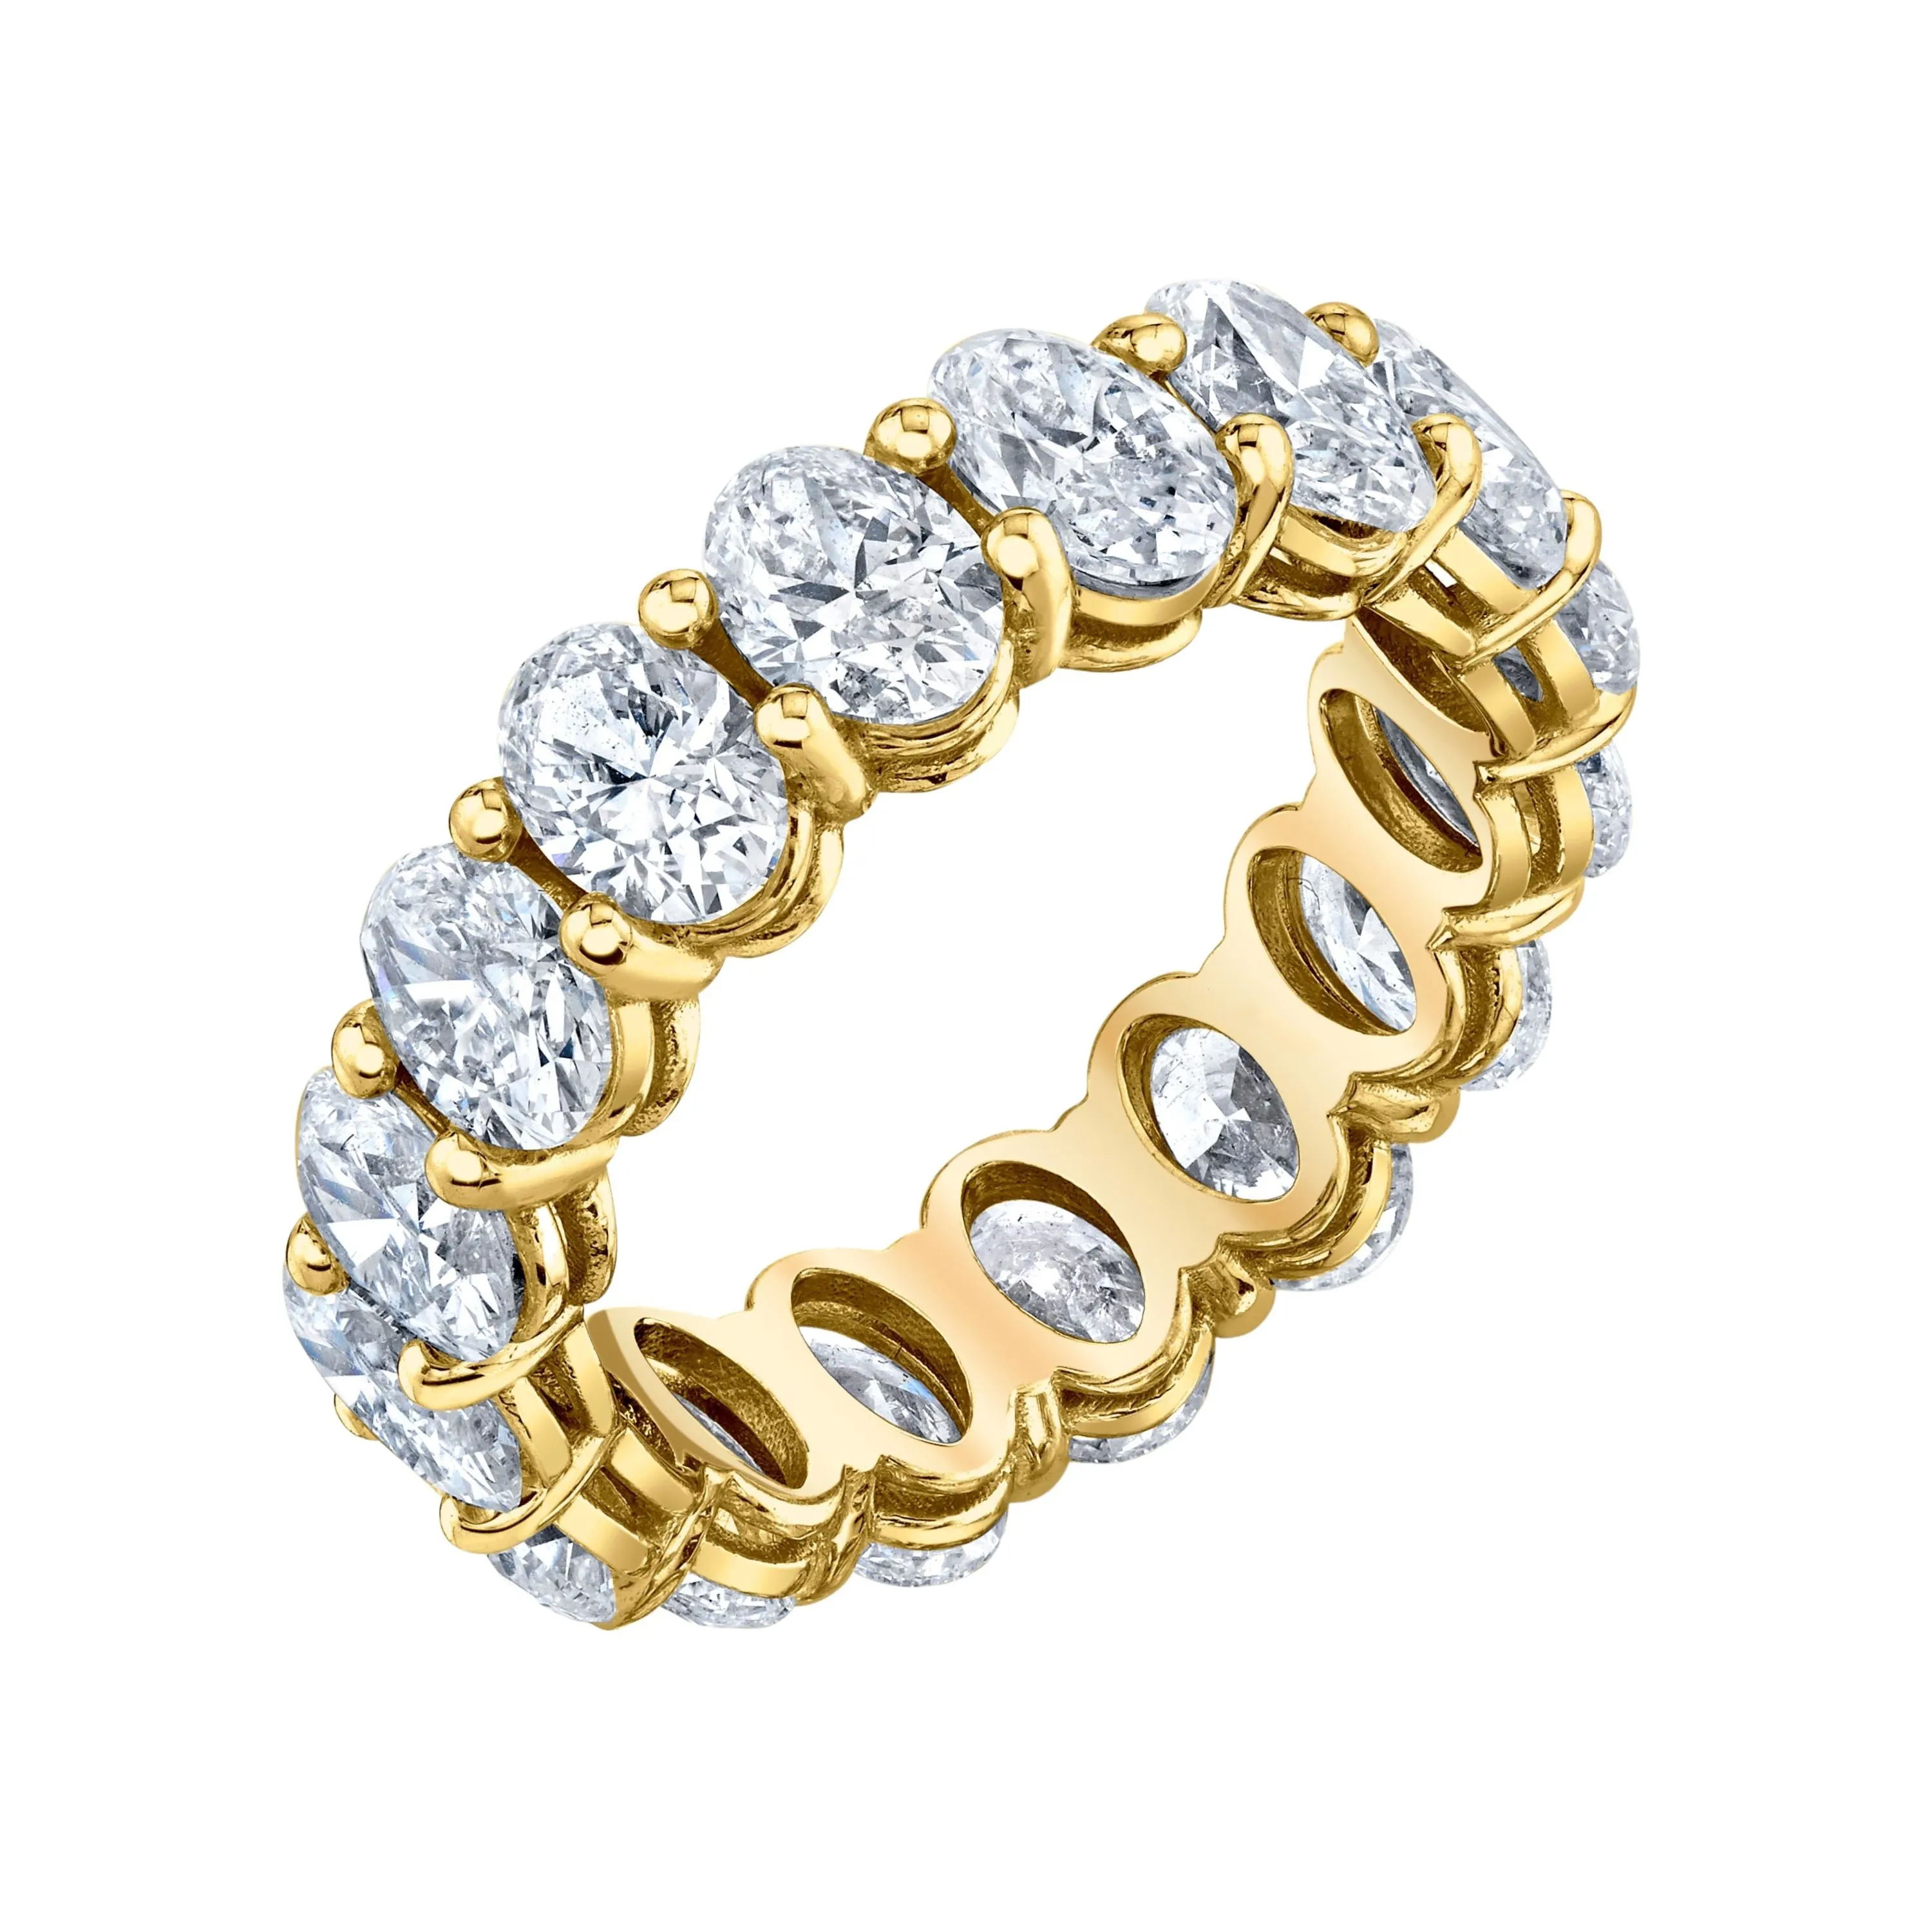 Gemnel แหวนทอง18K สุดคลาสสิค925,แหวนสีรุ้งเพชรนิรันดร์สีชมพูเวอร์เมียล